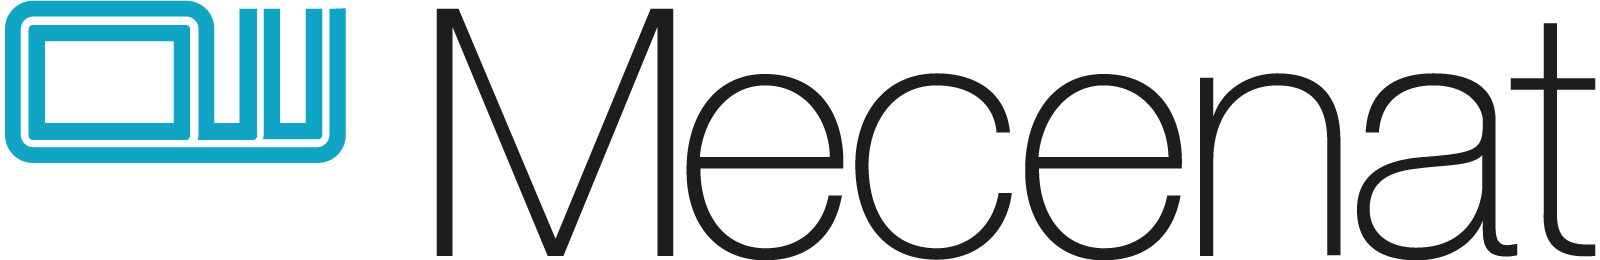 Mecenat-logo-rgb_1600x268